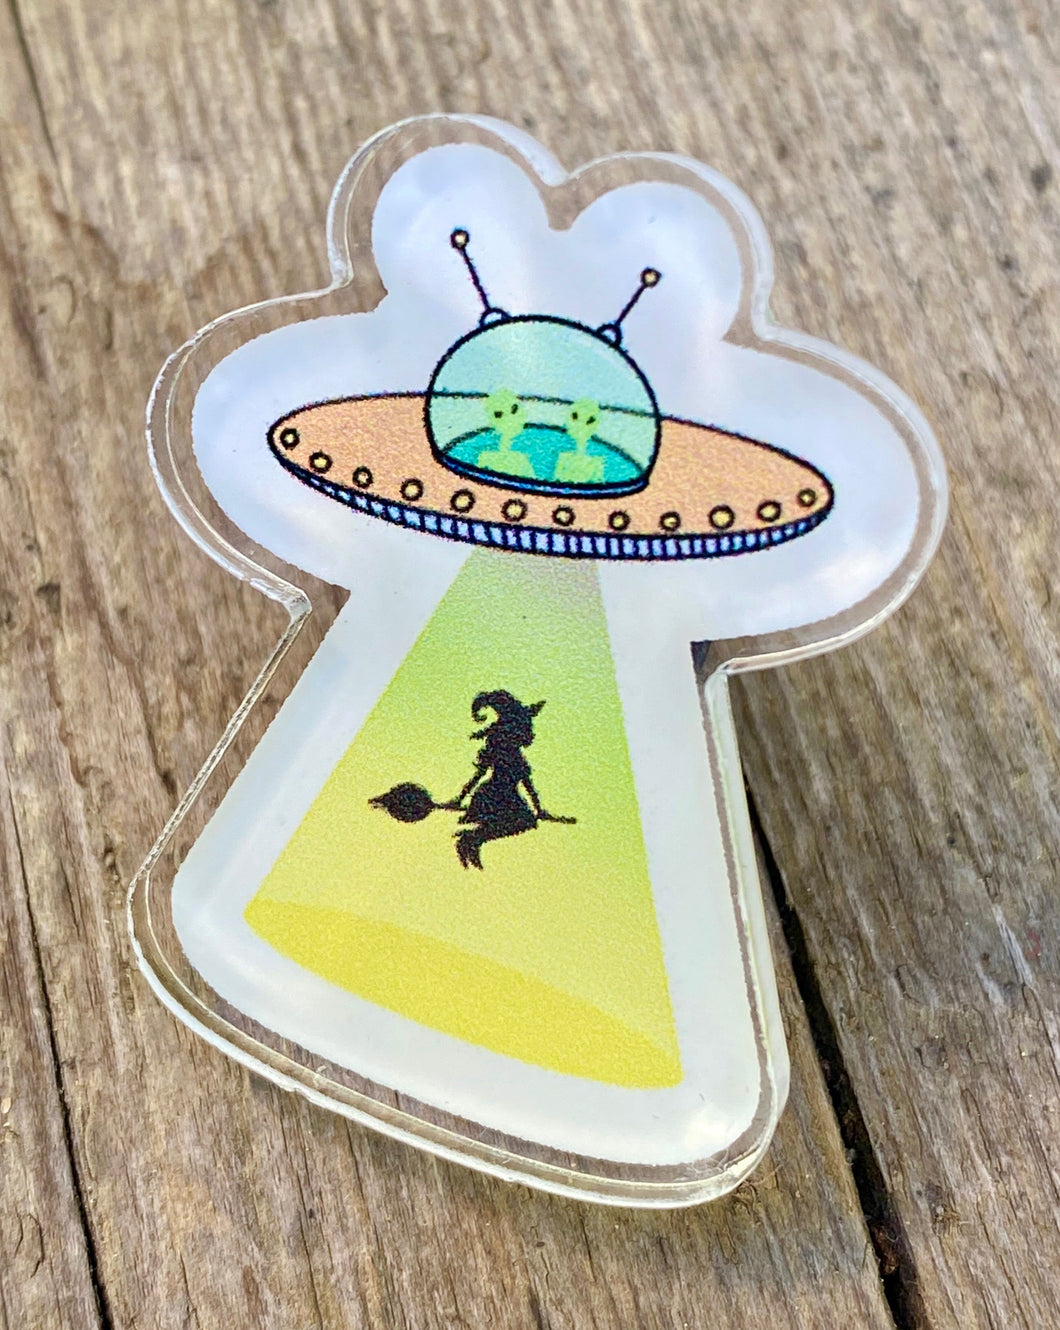 Alien Abduction Pin